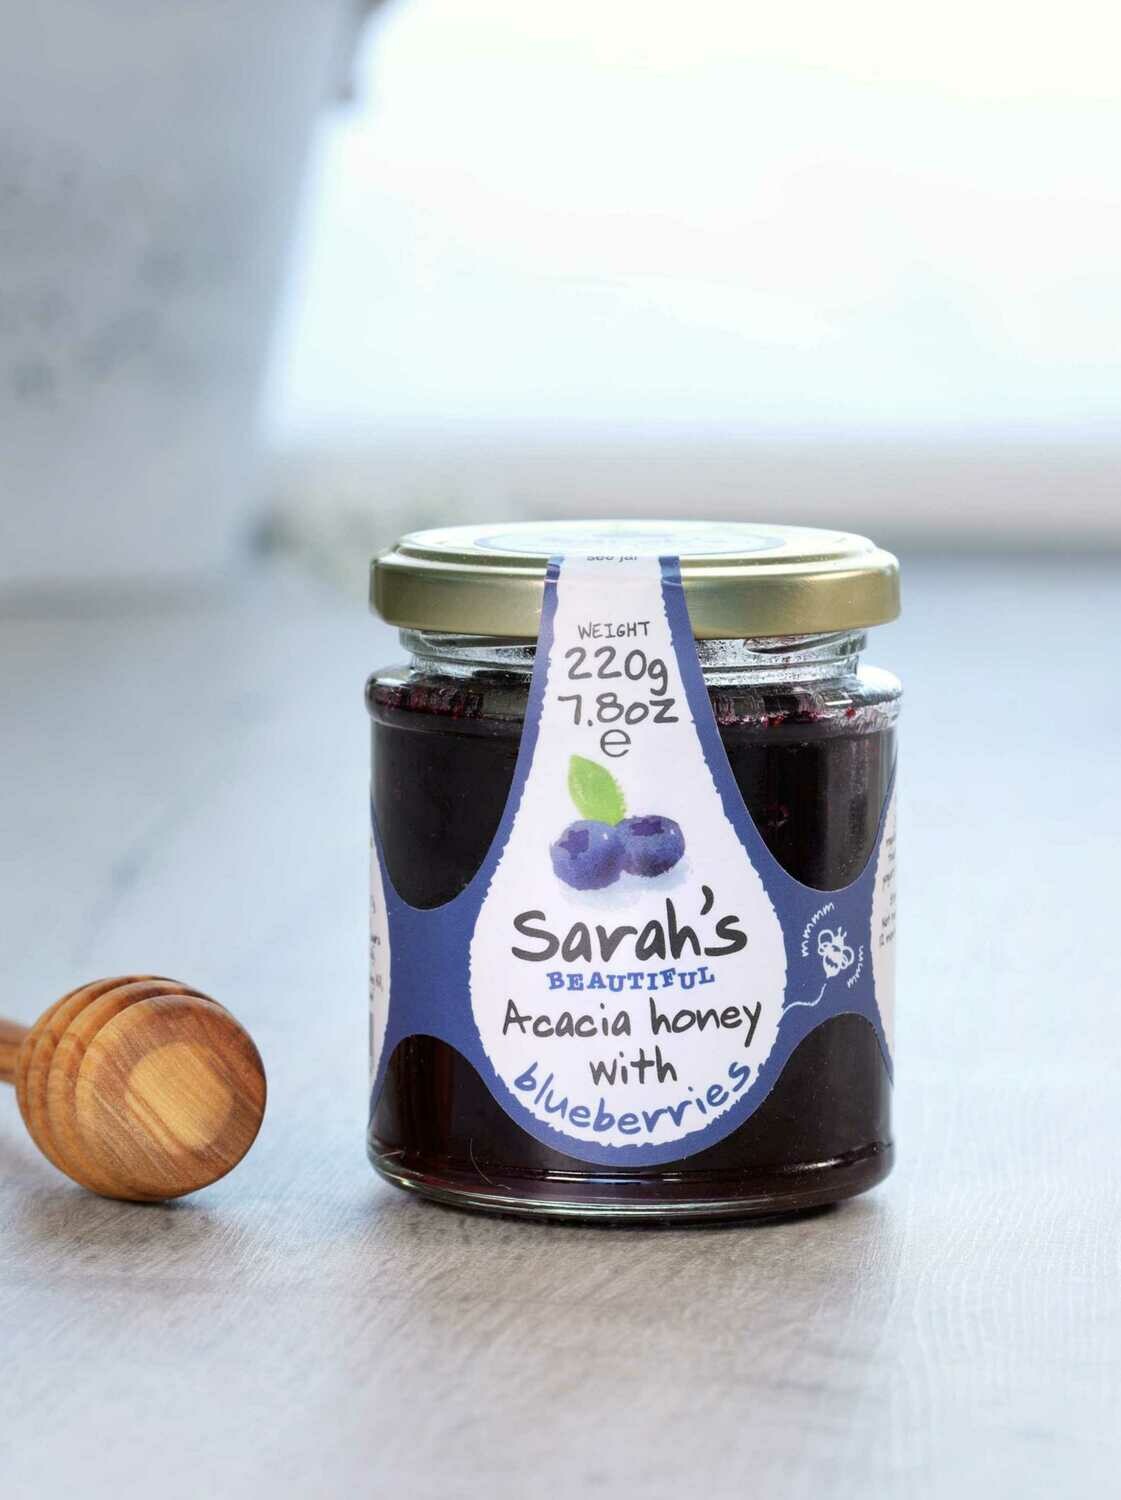 Sarah's Beautiful Acacia Honey with Blueberries